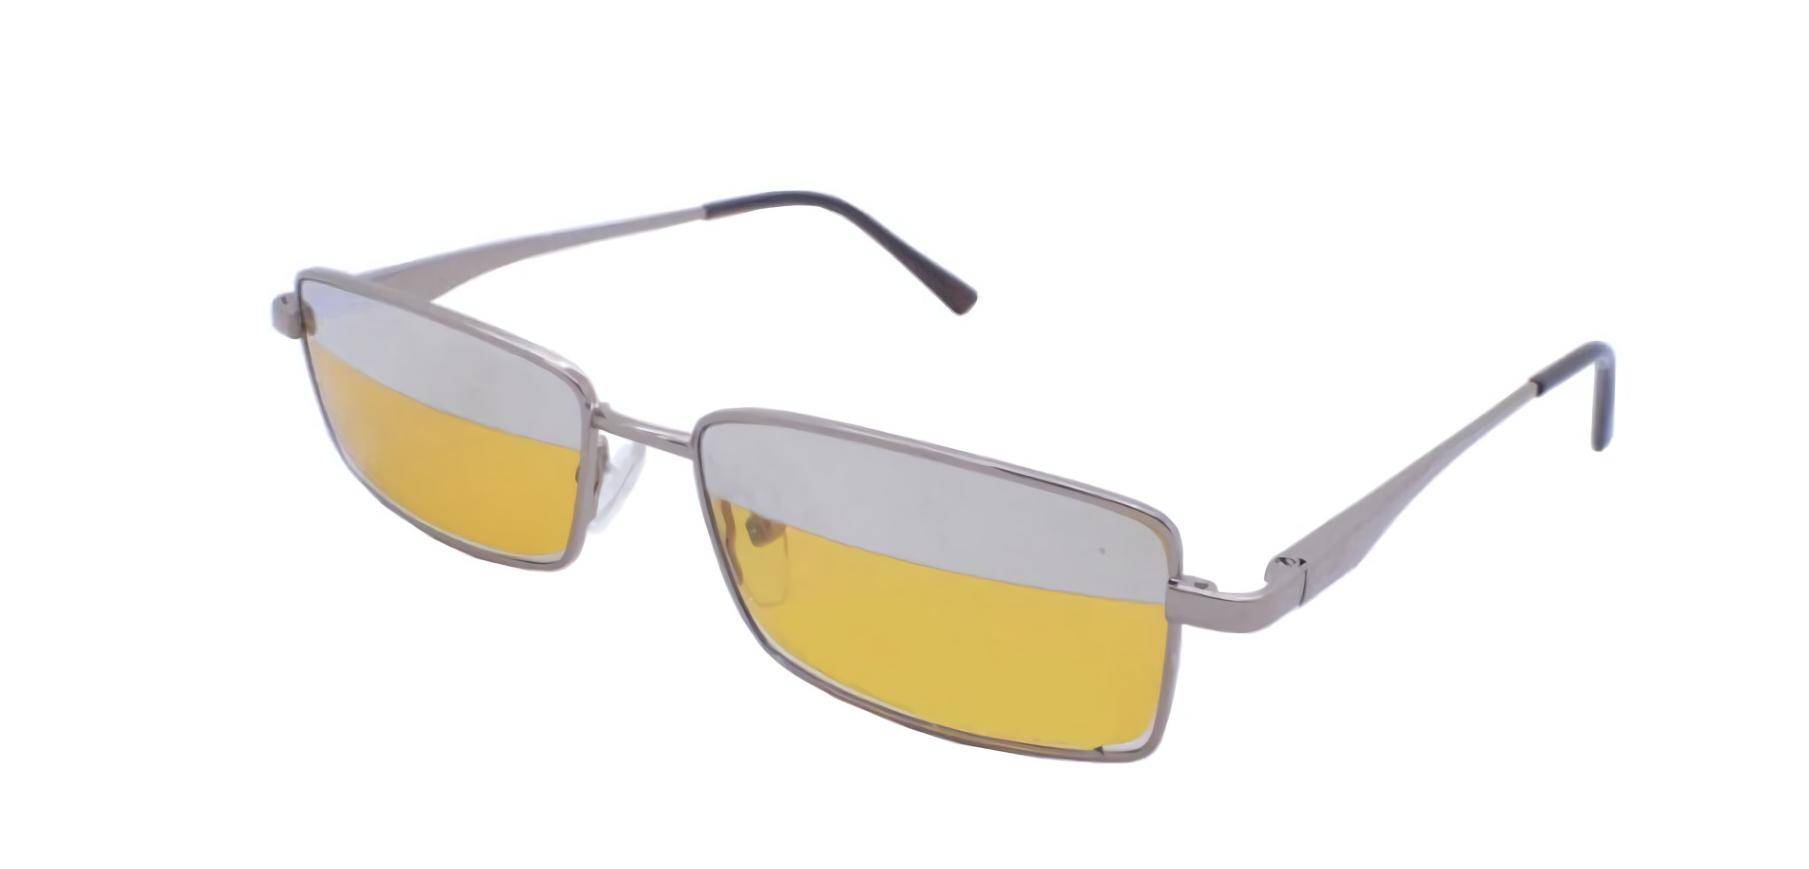 Mystery glass. Очки для водителей Mystery 0116. Поляризационные очки для водителя. Антифарные очки для водителей антиблик. Тест на очки антифары.